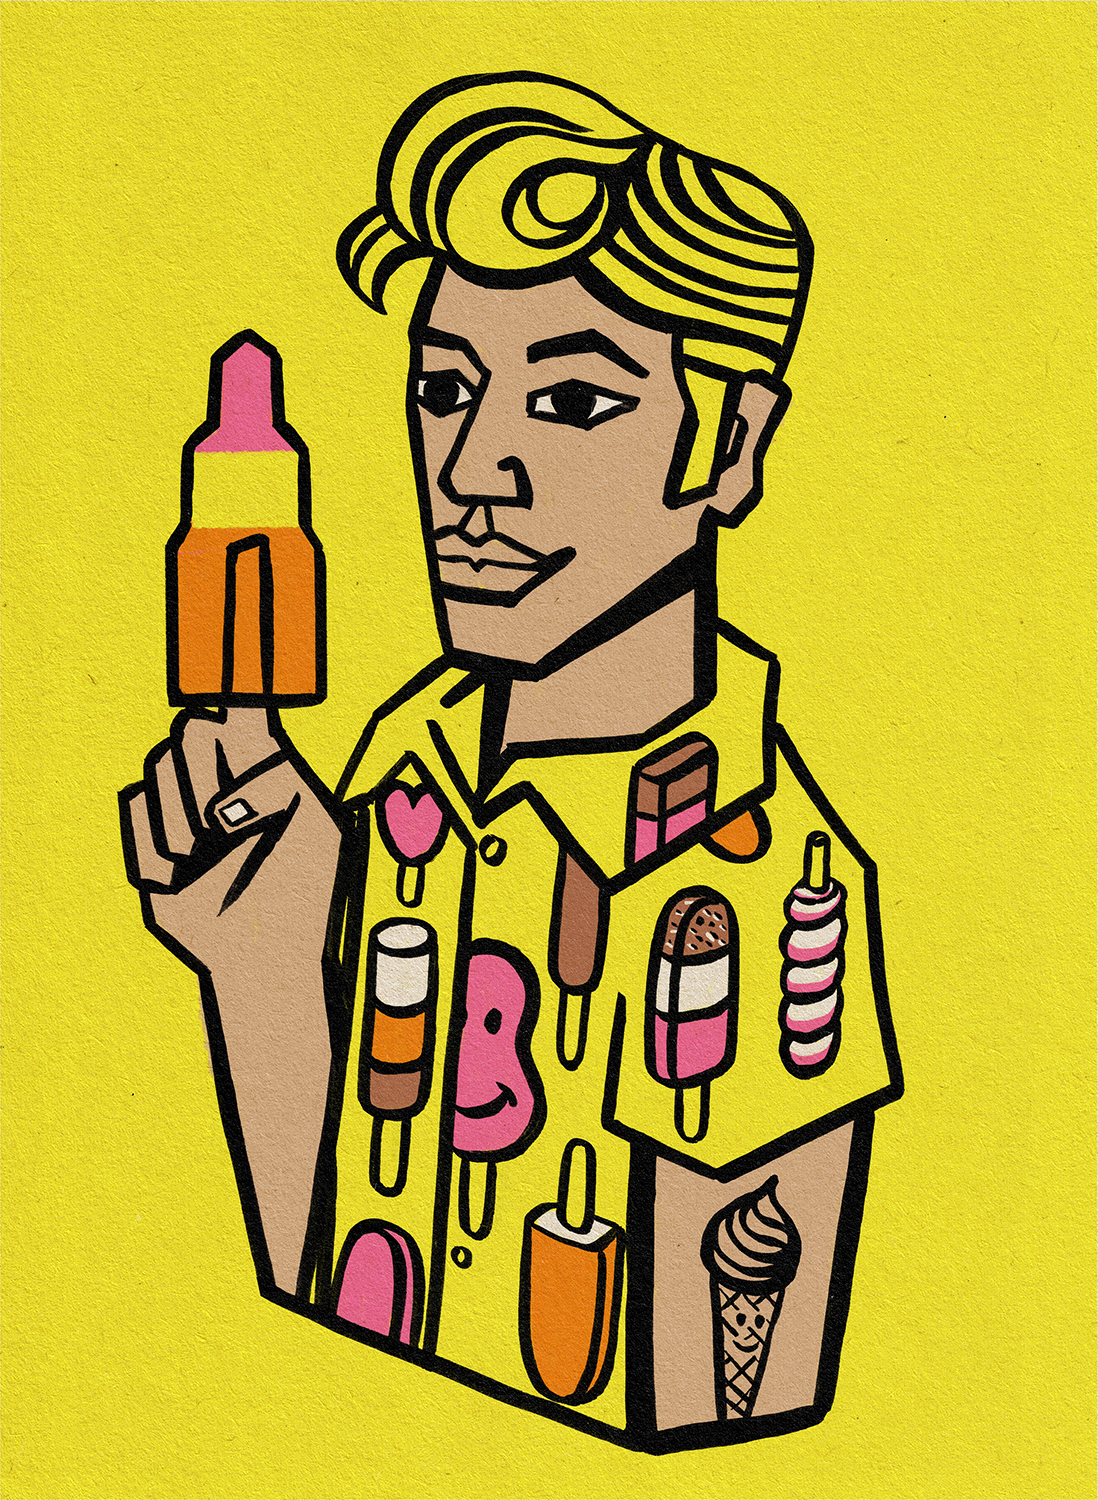 Popsicle Guy Illustration